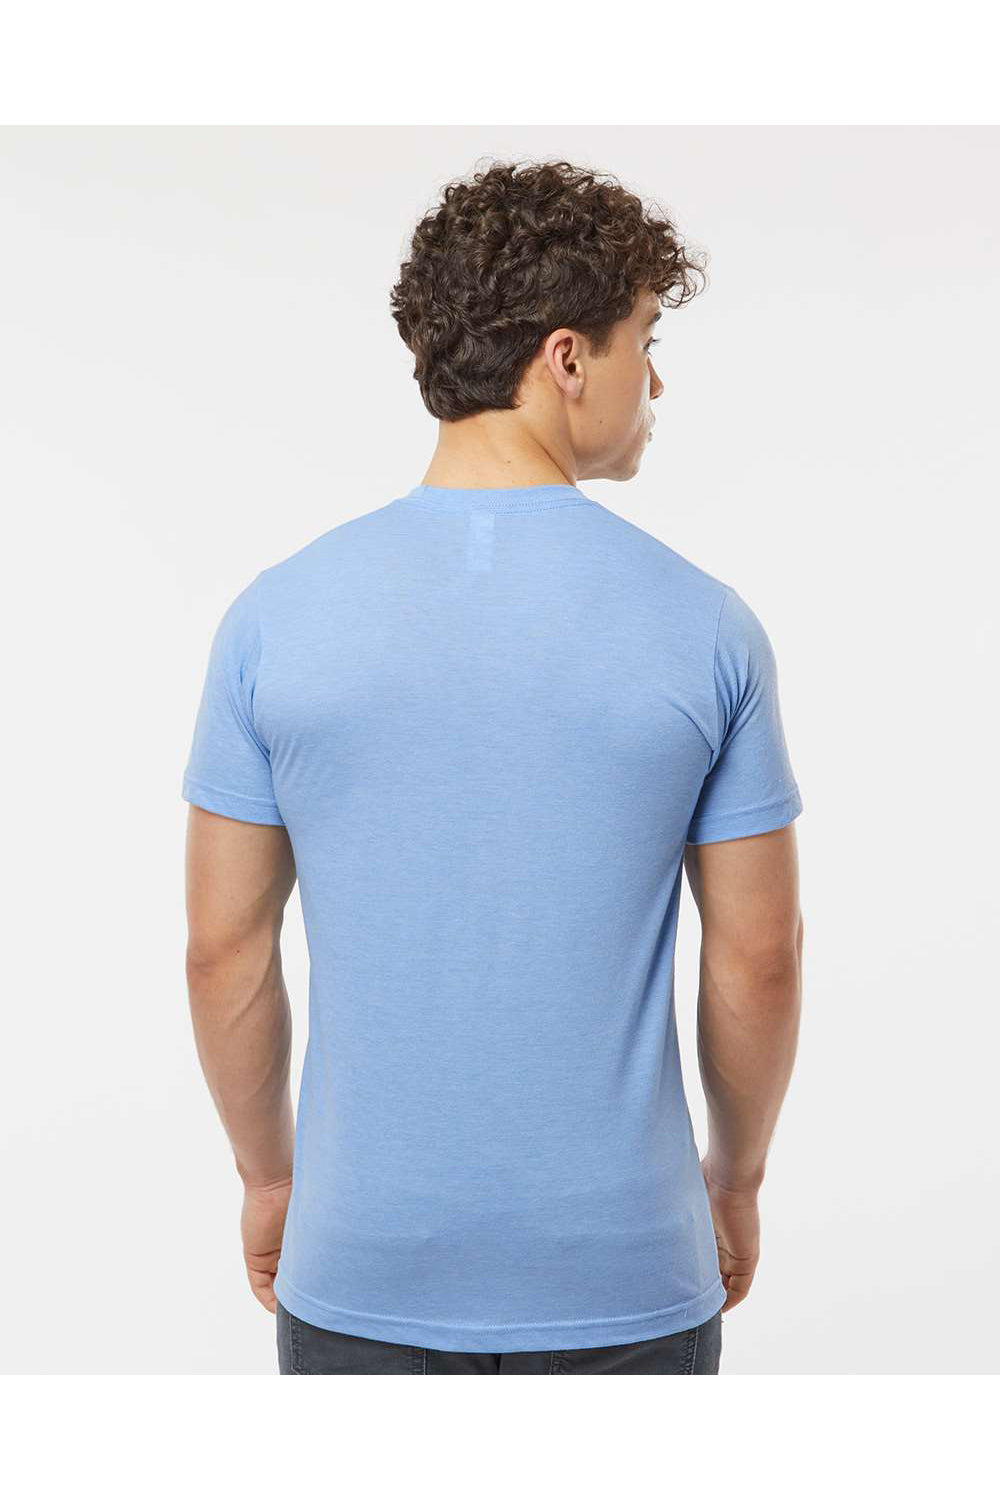 Tultex 241 Mens Poly-Rich Short Sleeve Crewneck T-Shirt Heather Athletic Blue Model Back